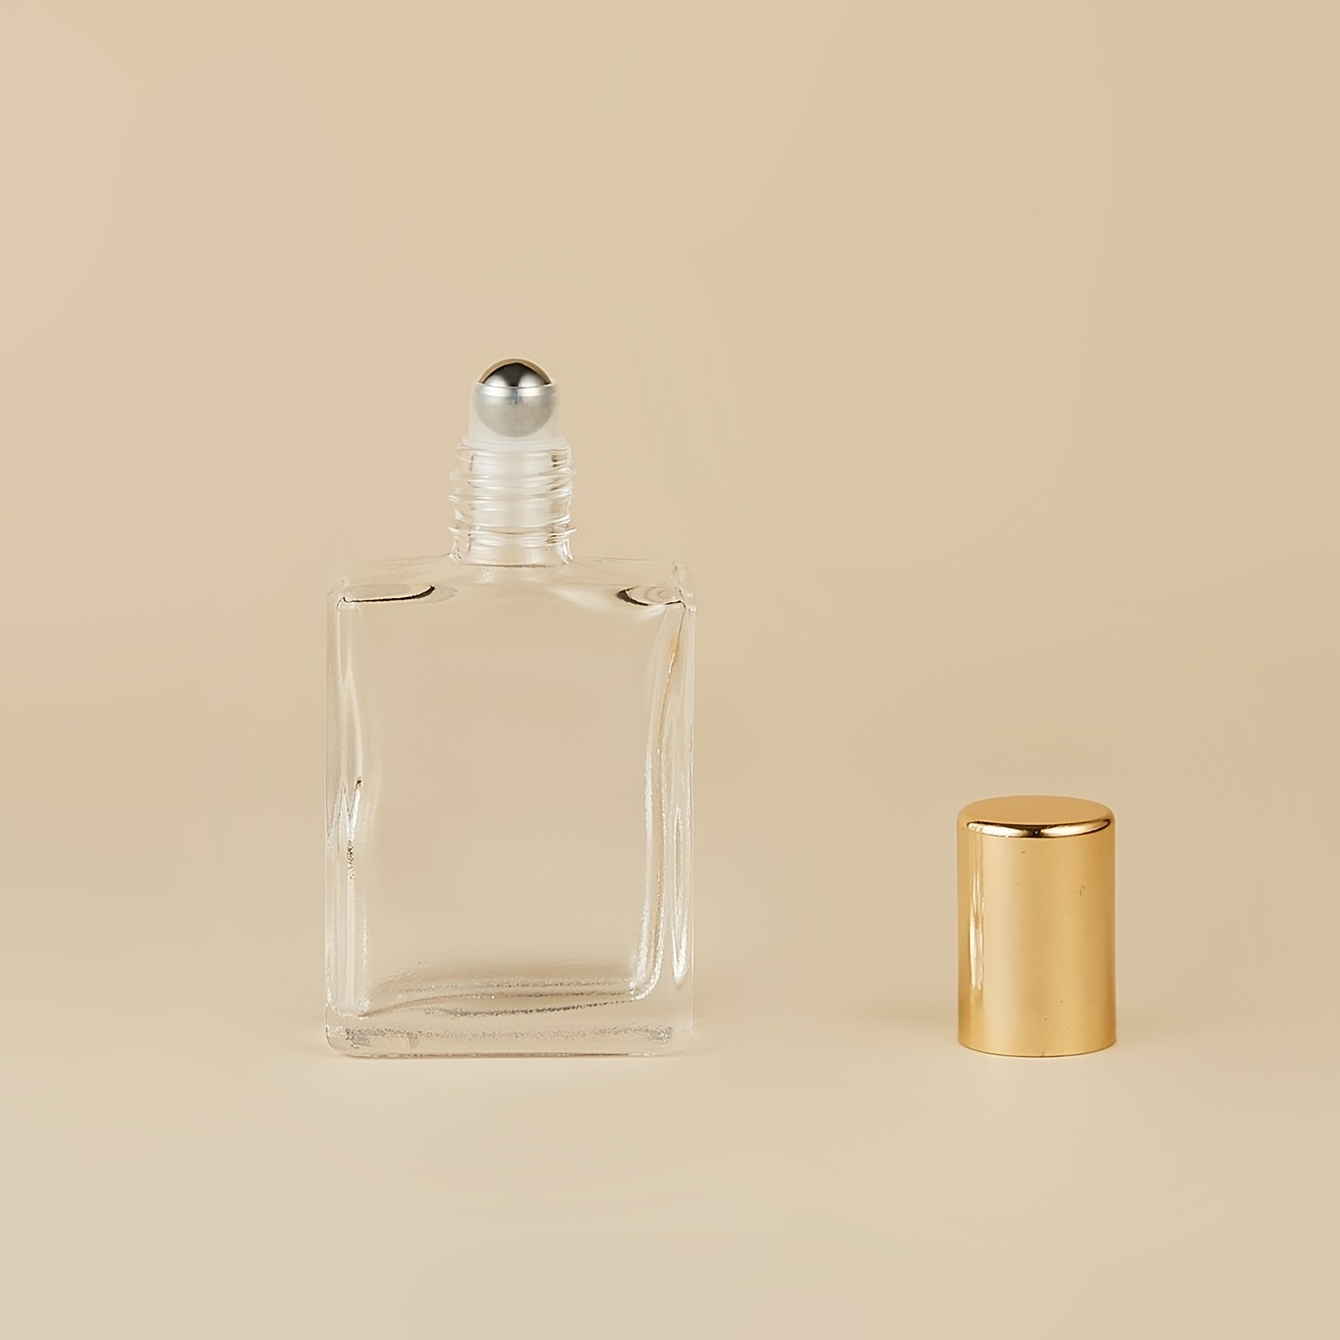 FANCY 100ml Perfume Bottle Square Grids Portable Clear Travel Refillable  Perfume Glass Empty Bottle